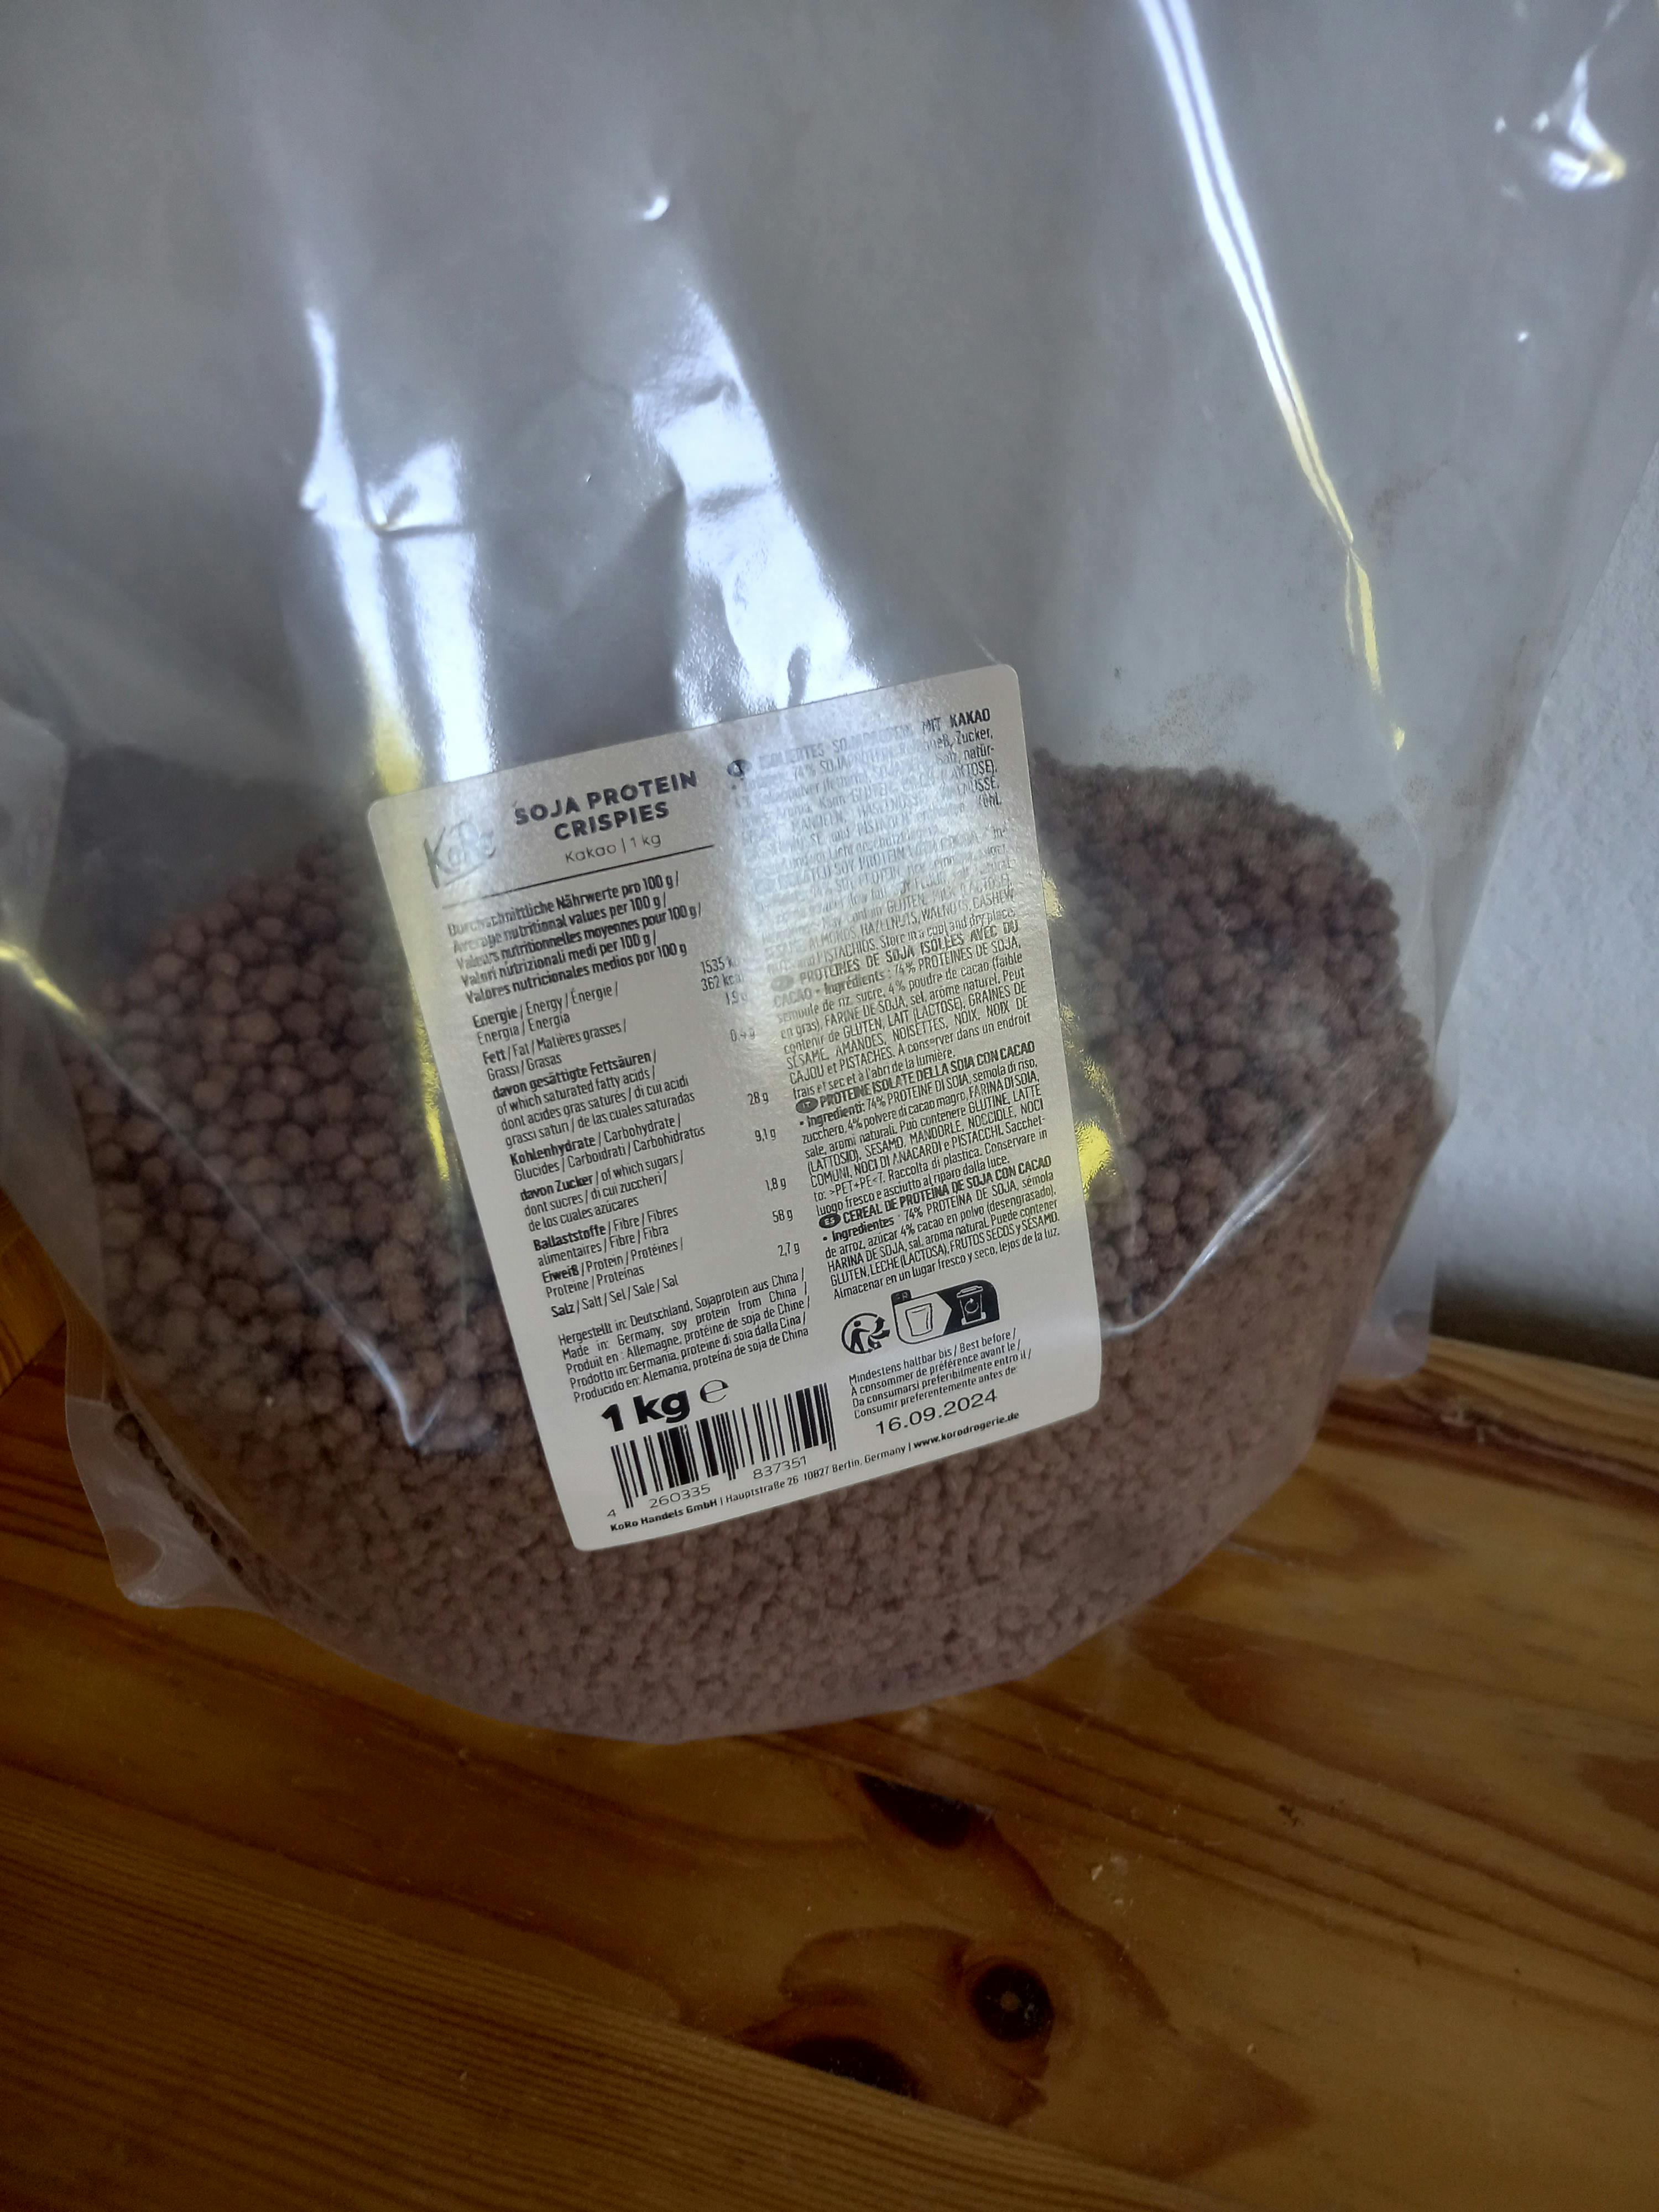 High-Protein Soja Crispies Choco 1500g » ChraftFuetter